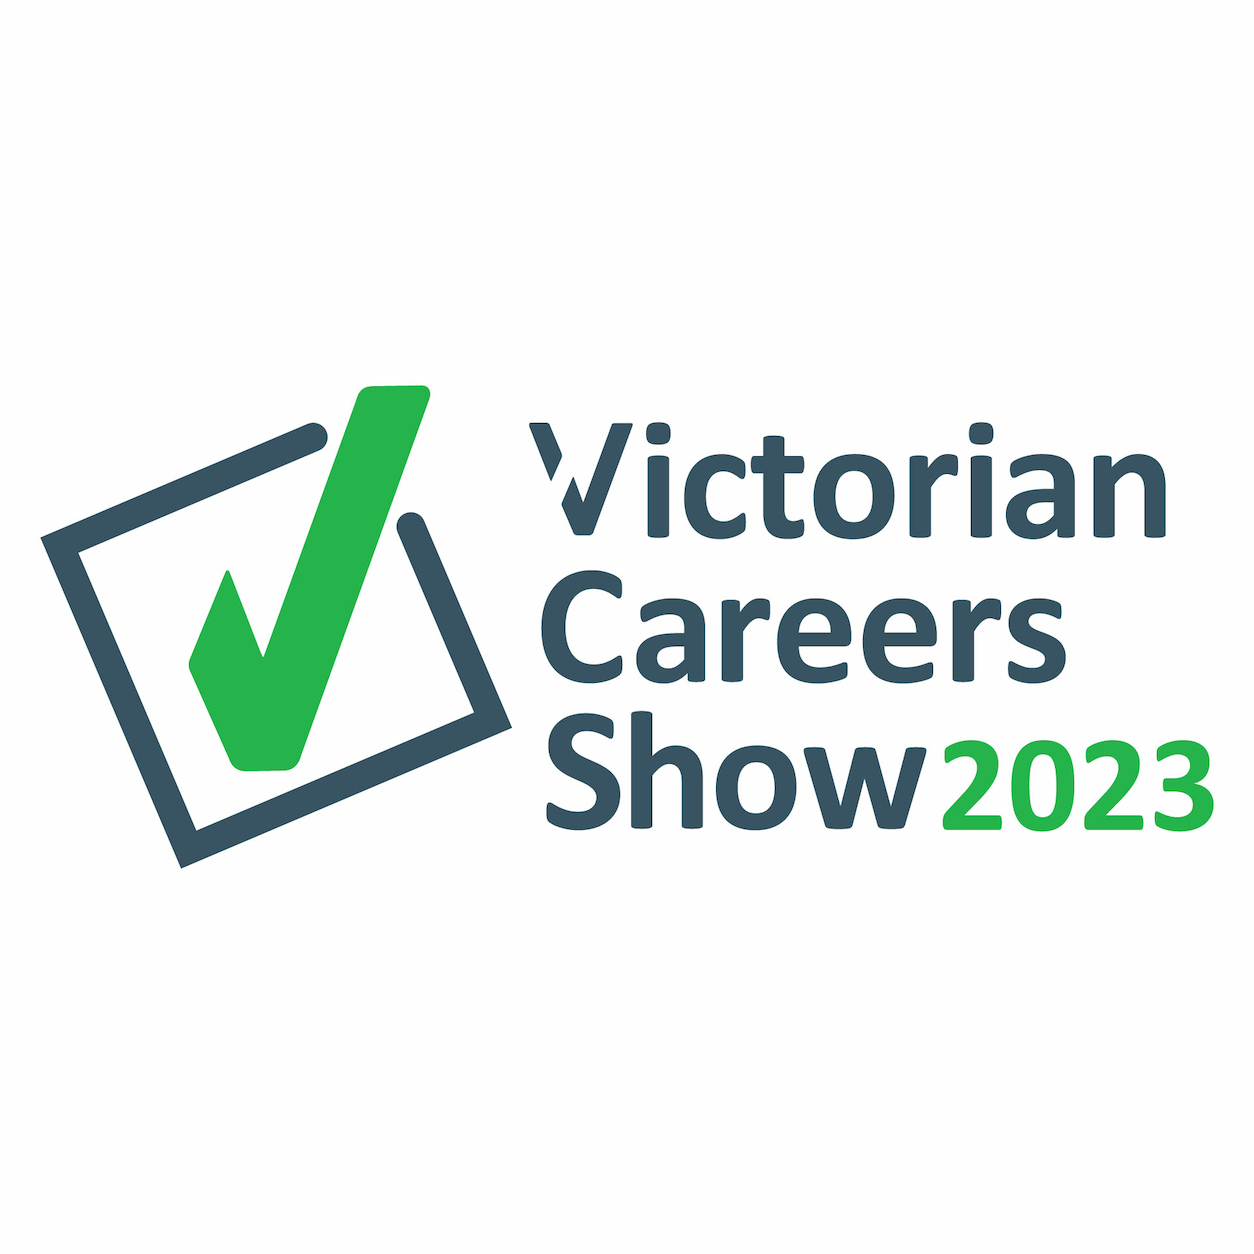 Victorian Careers Show 2023 logo